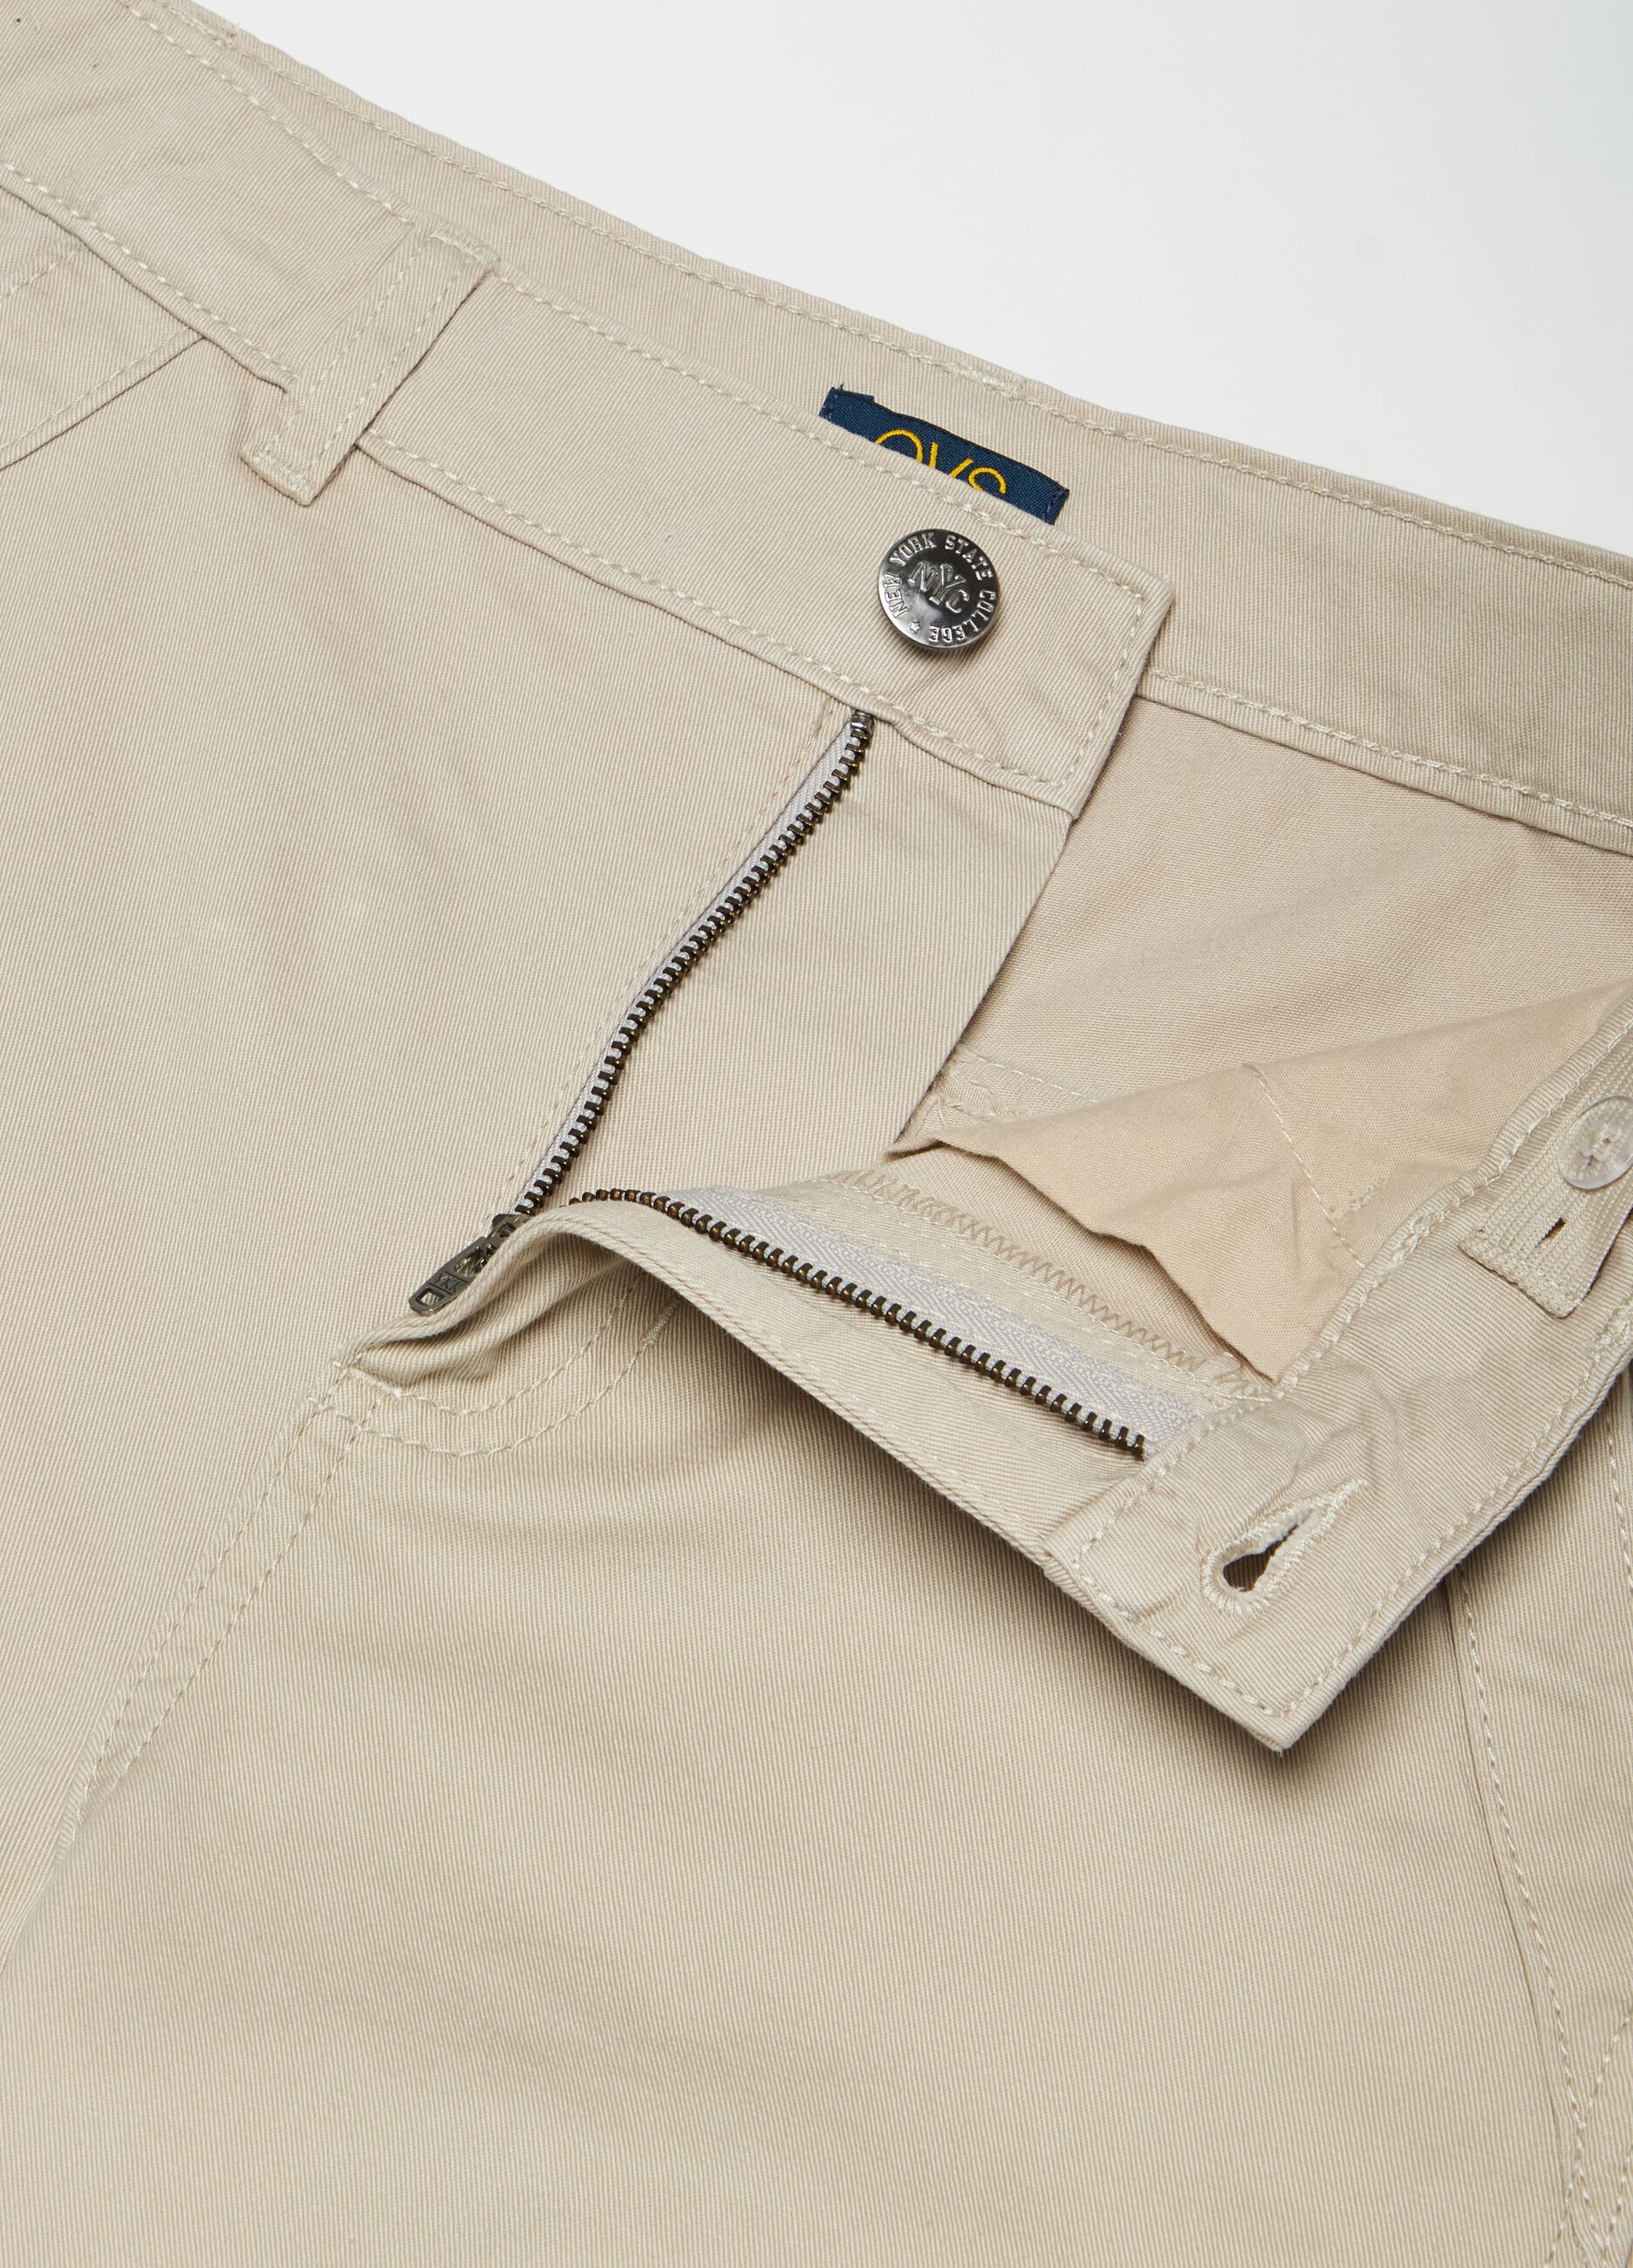 Carpenter Bermuda shorts in cotton